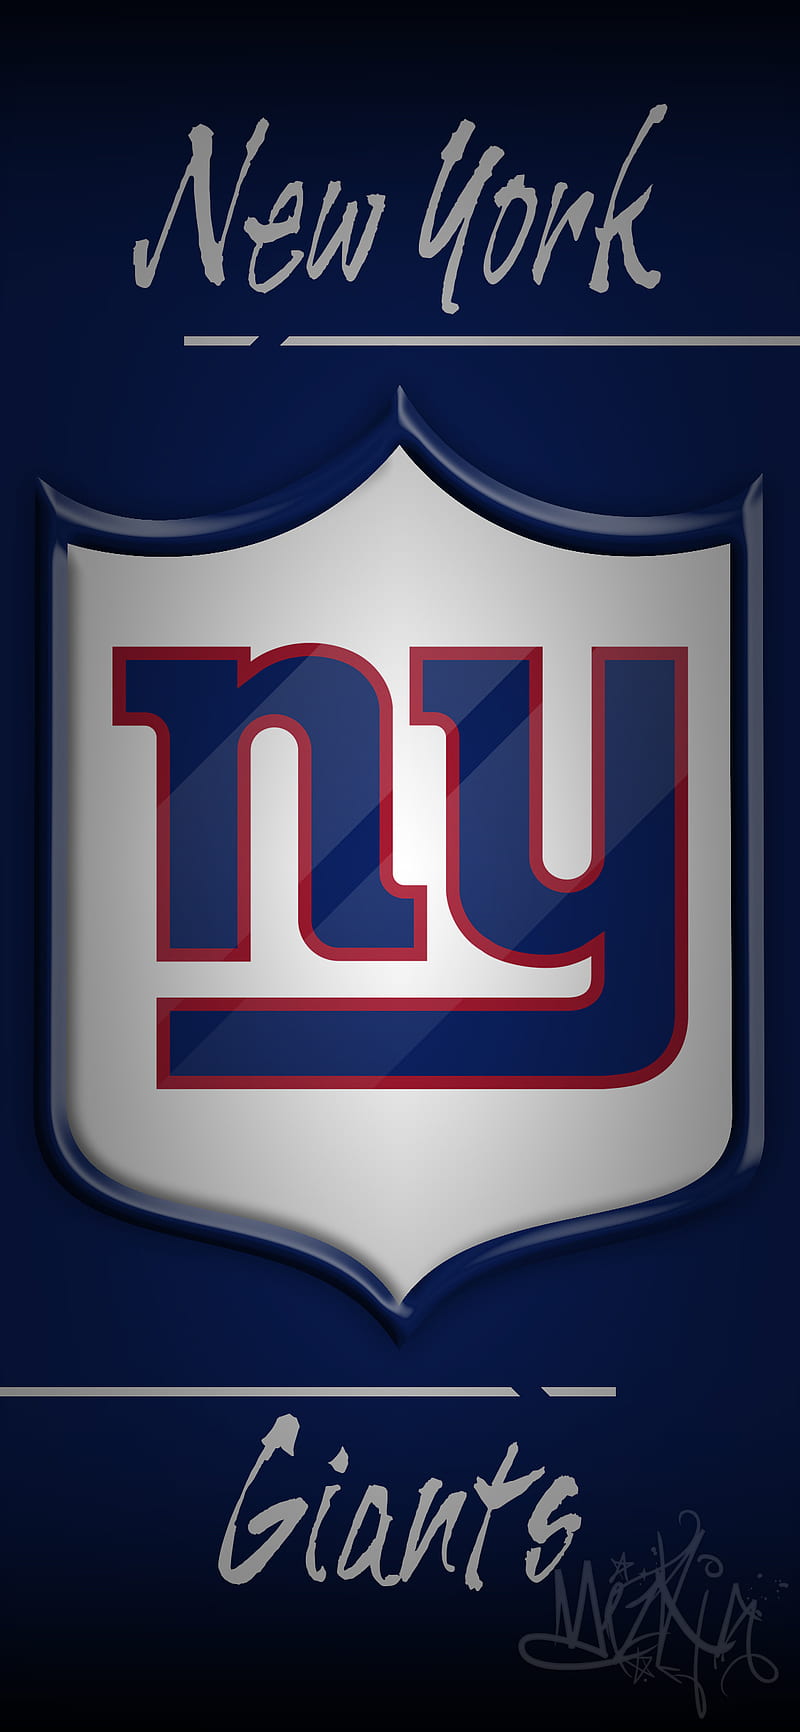 HD wallpaper: Football, New York Giants, Odell Beckham Jr.